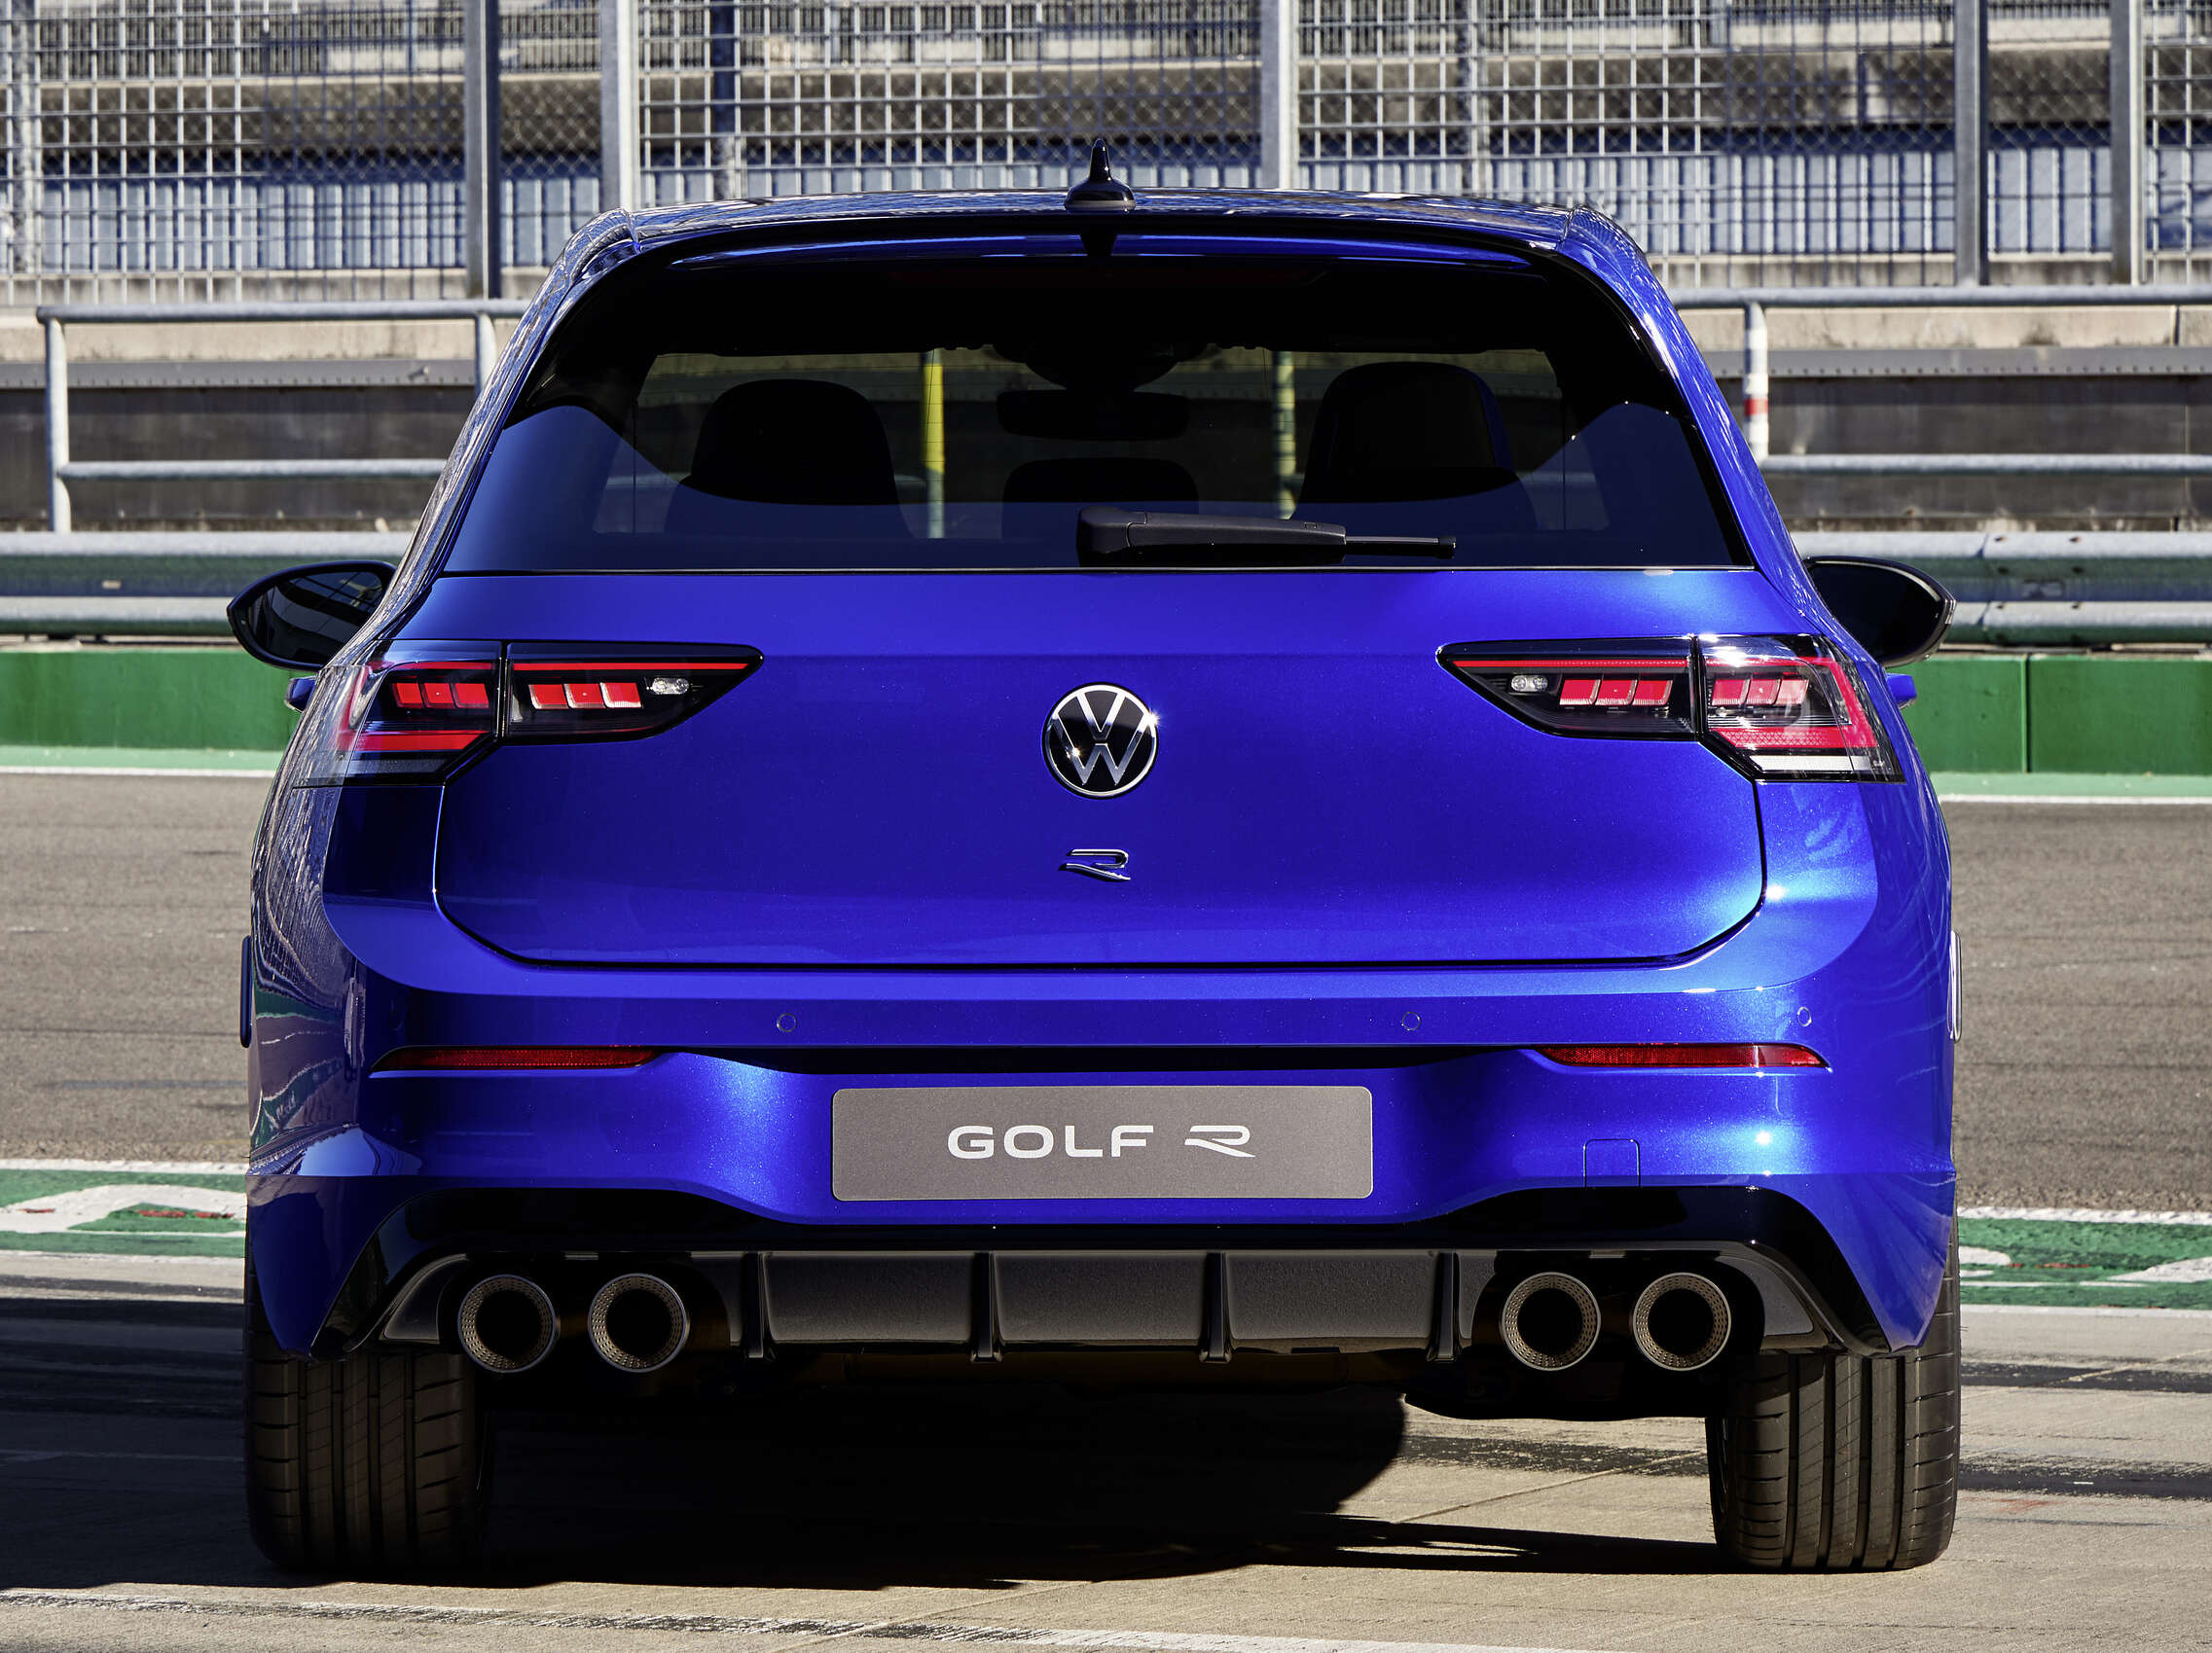 New Volkswagen Golf R